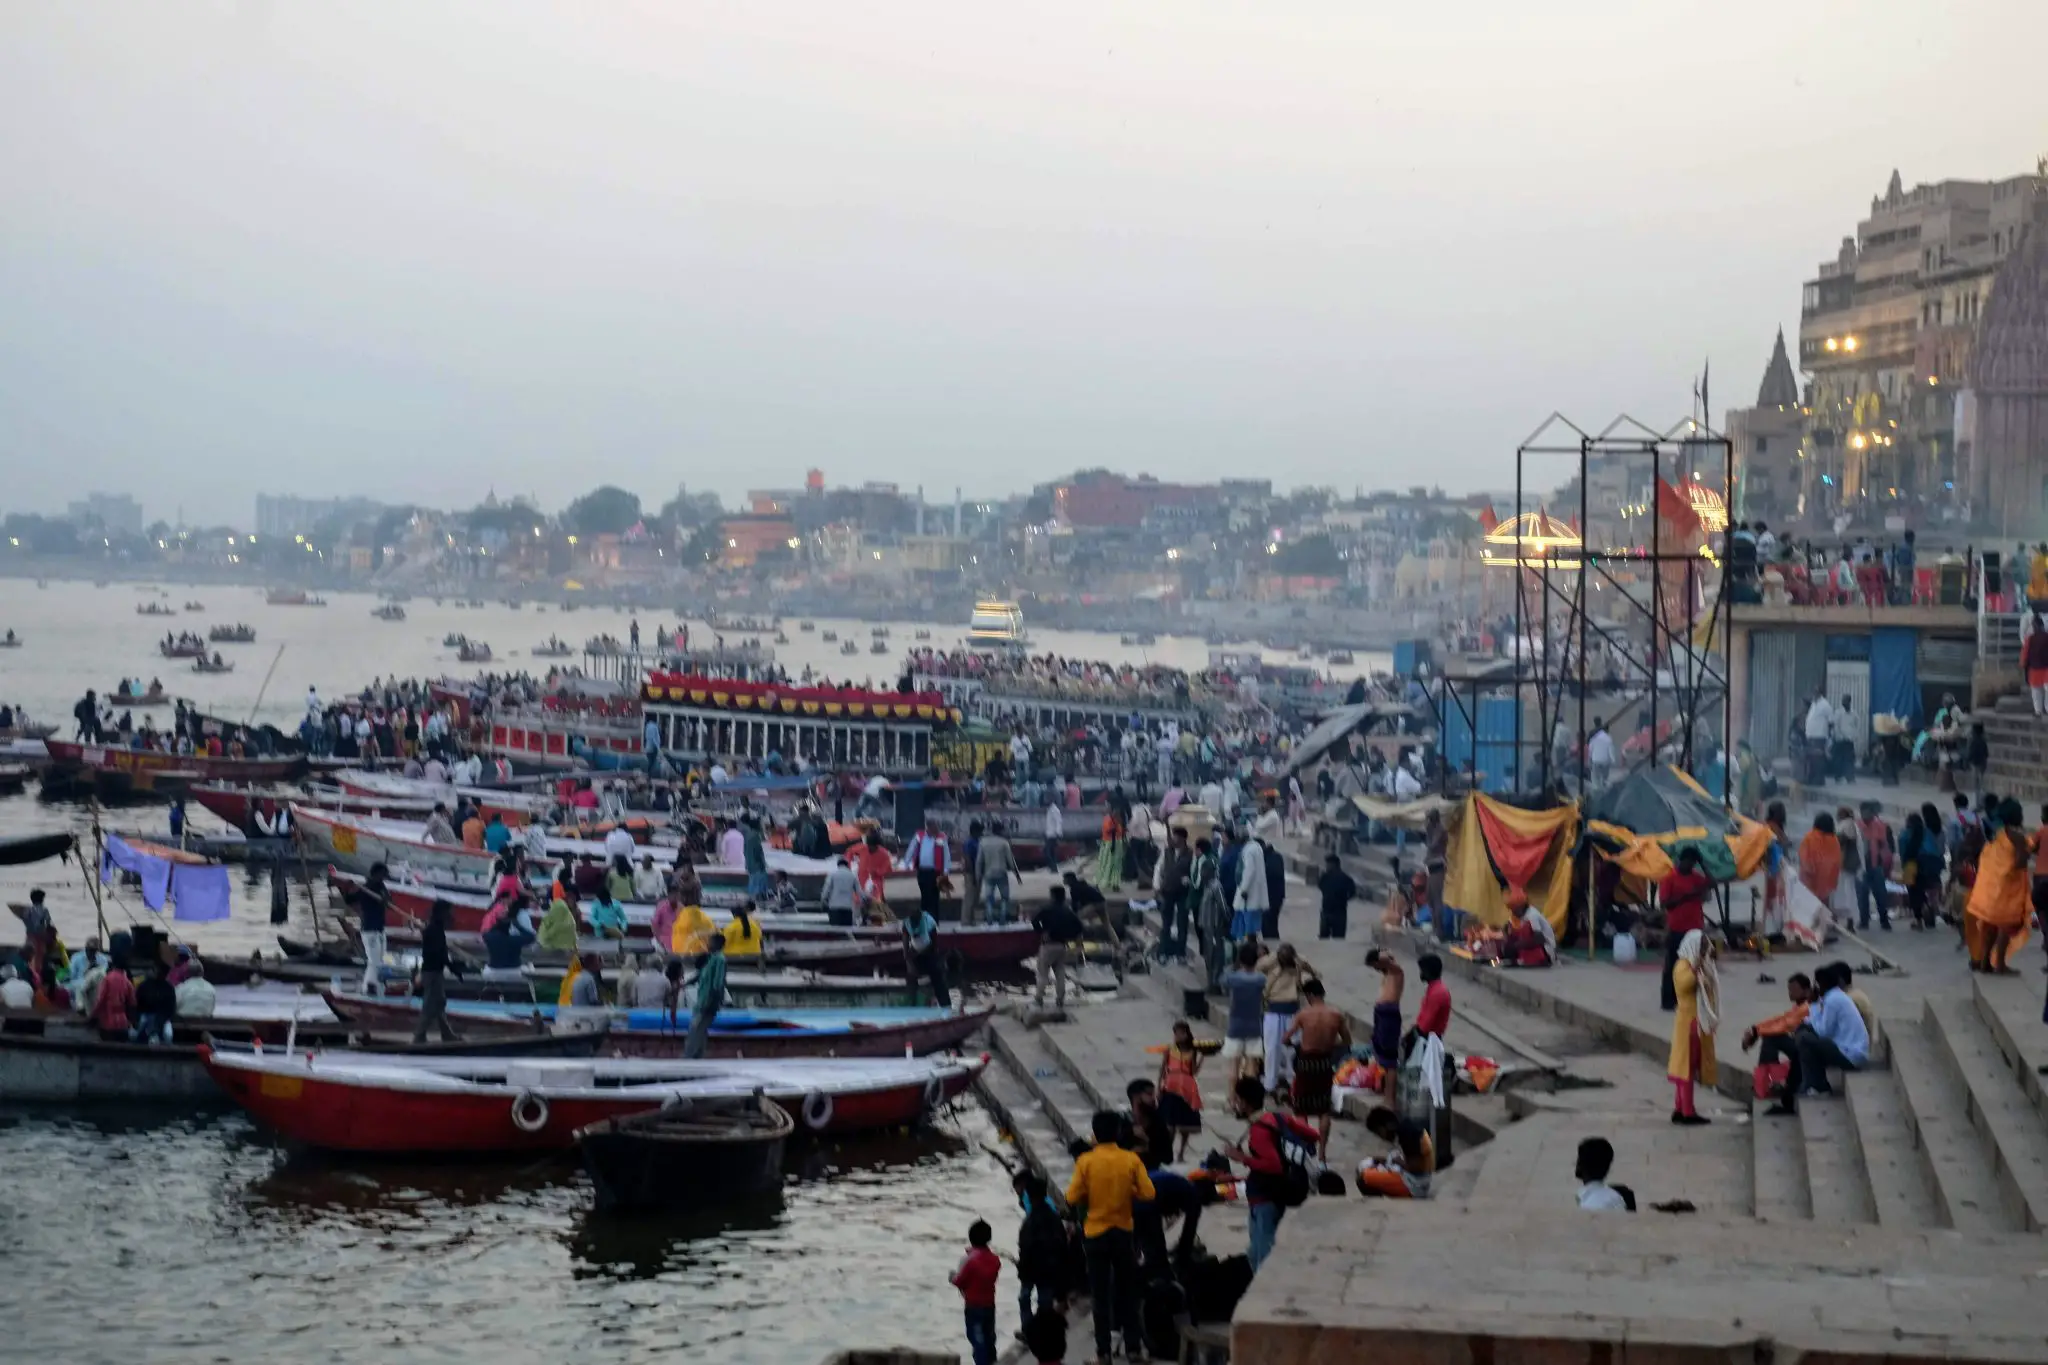 The ghats of Varanasi, India